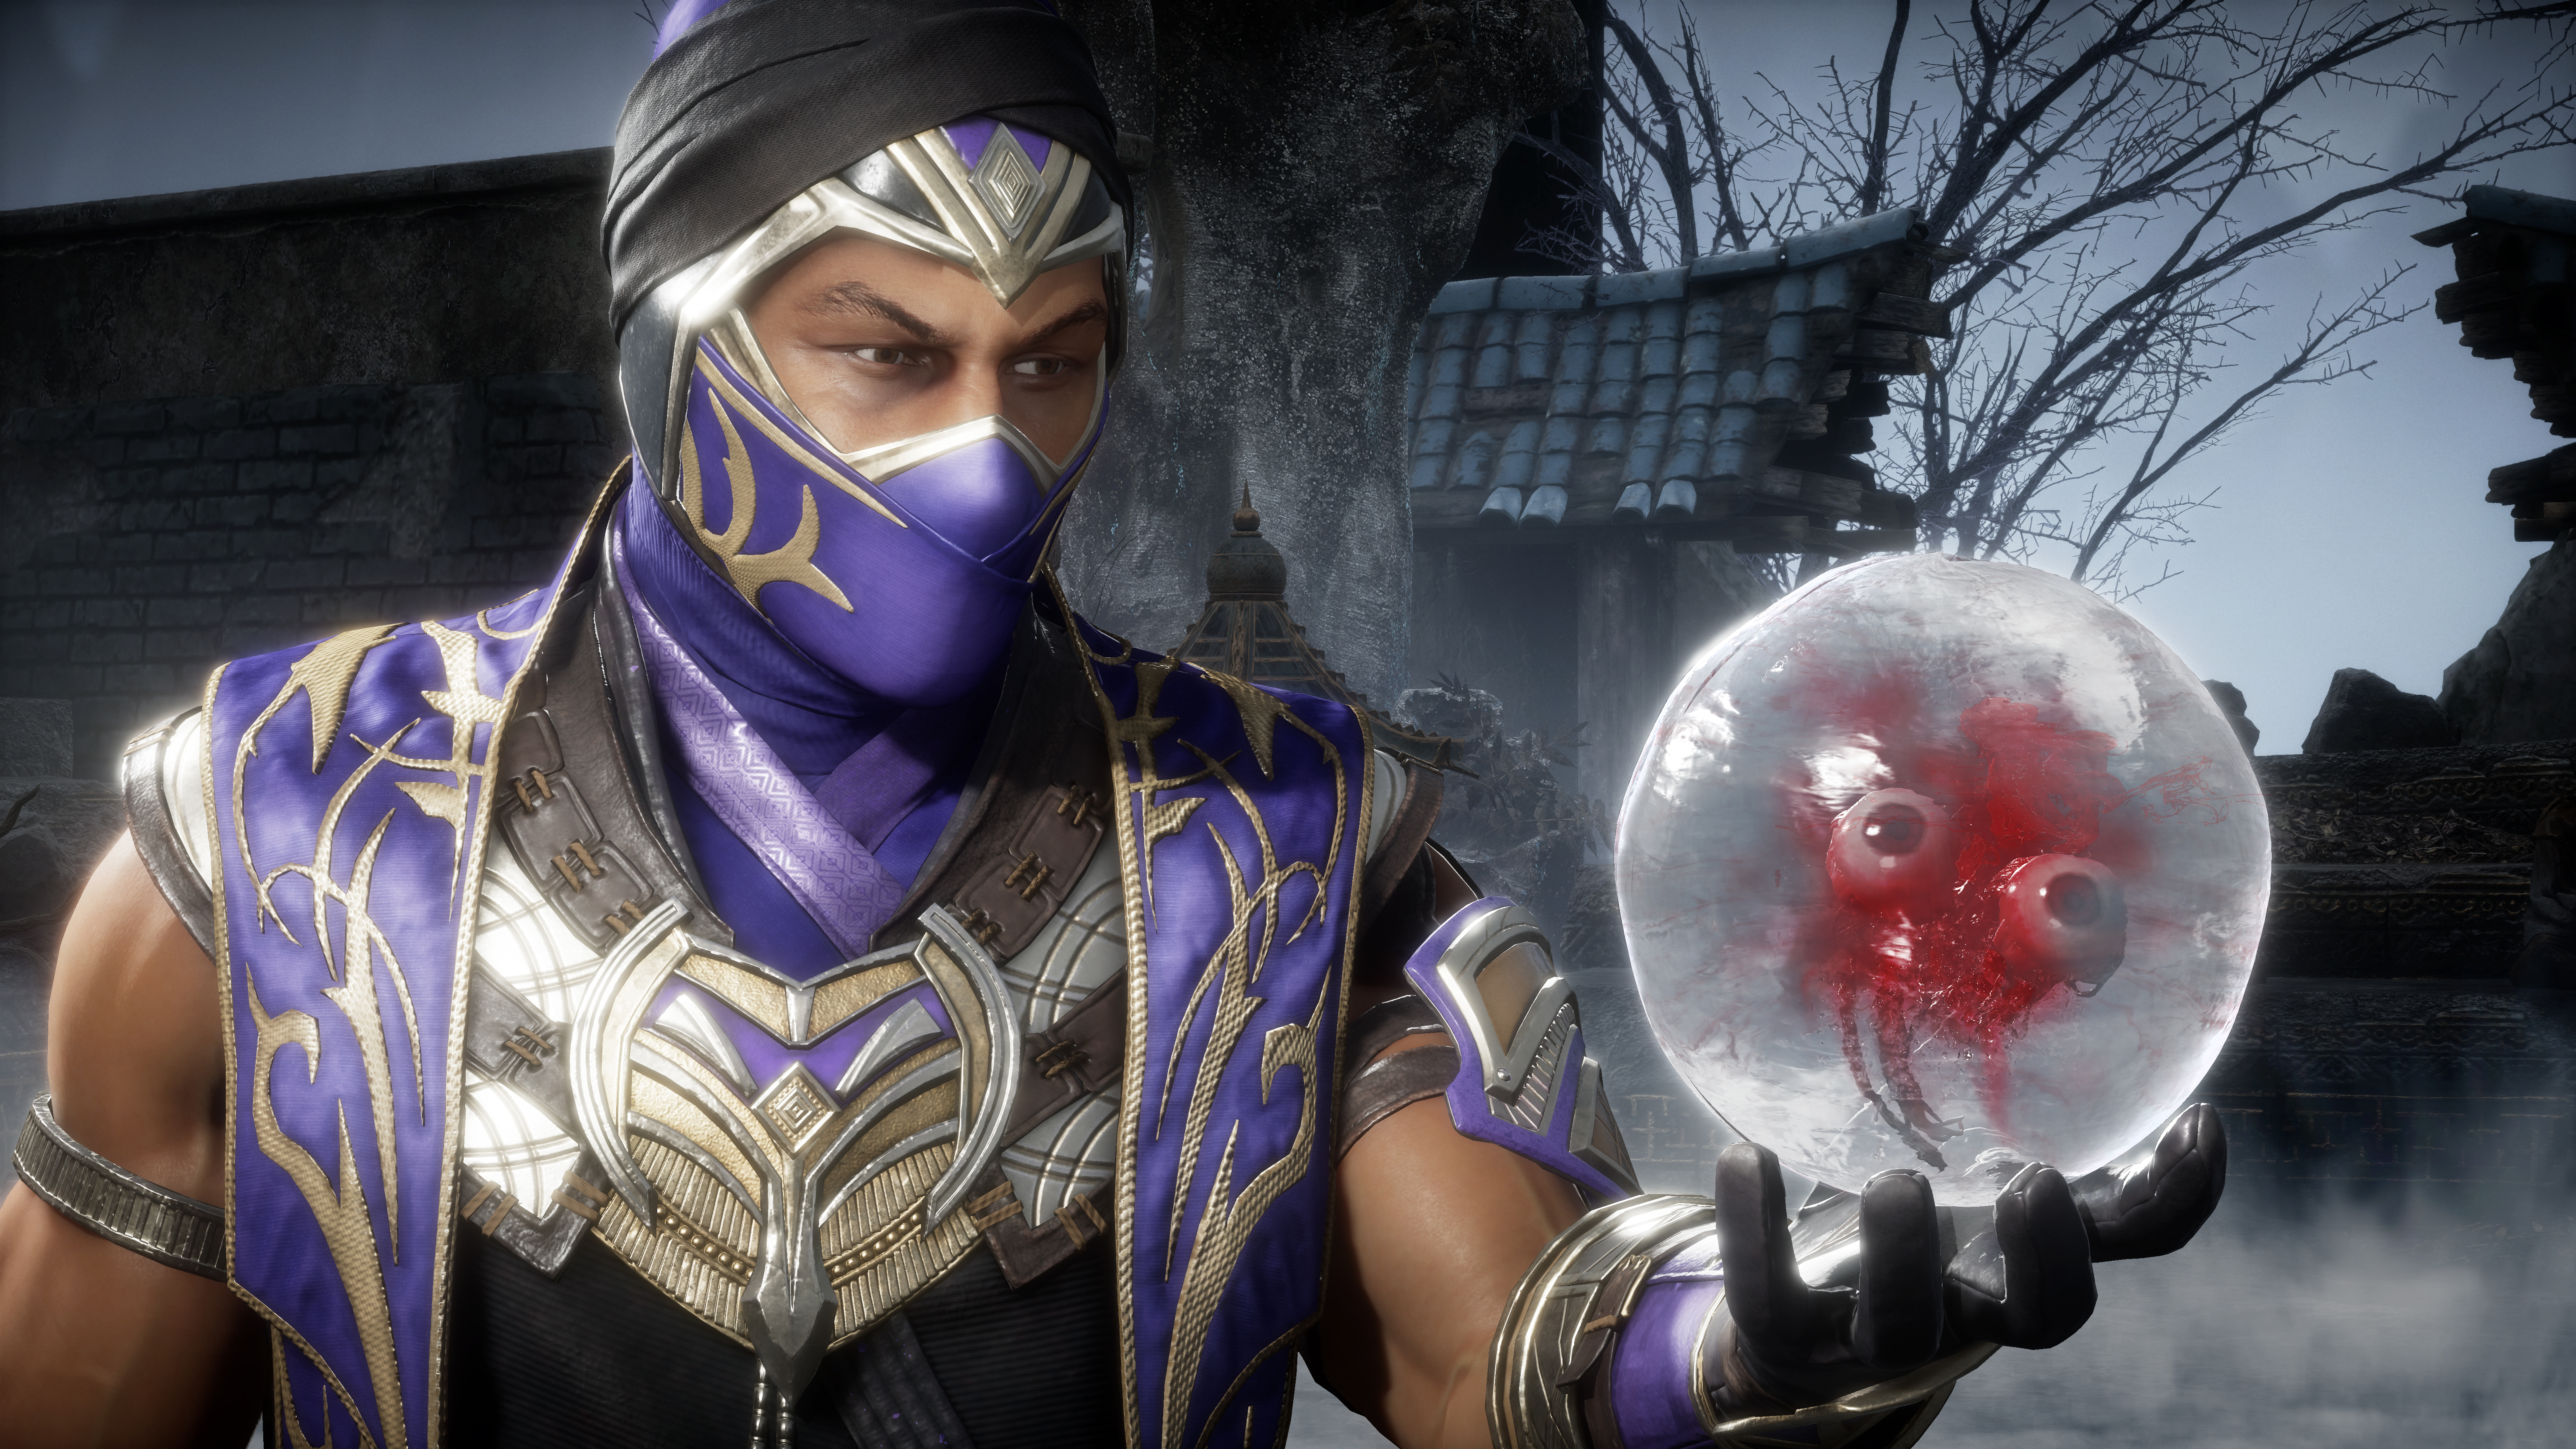 Mortal Kombat 11 Ultimate é lançado digitalmente pela Warner Games.